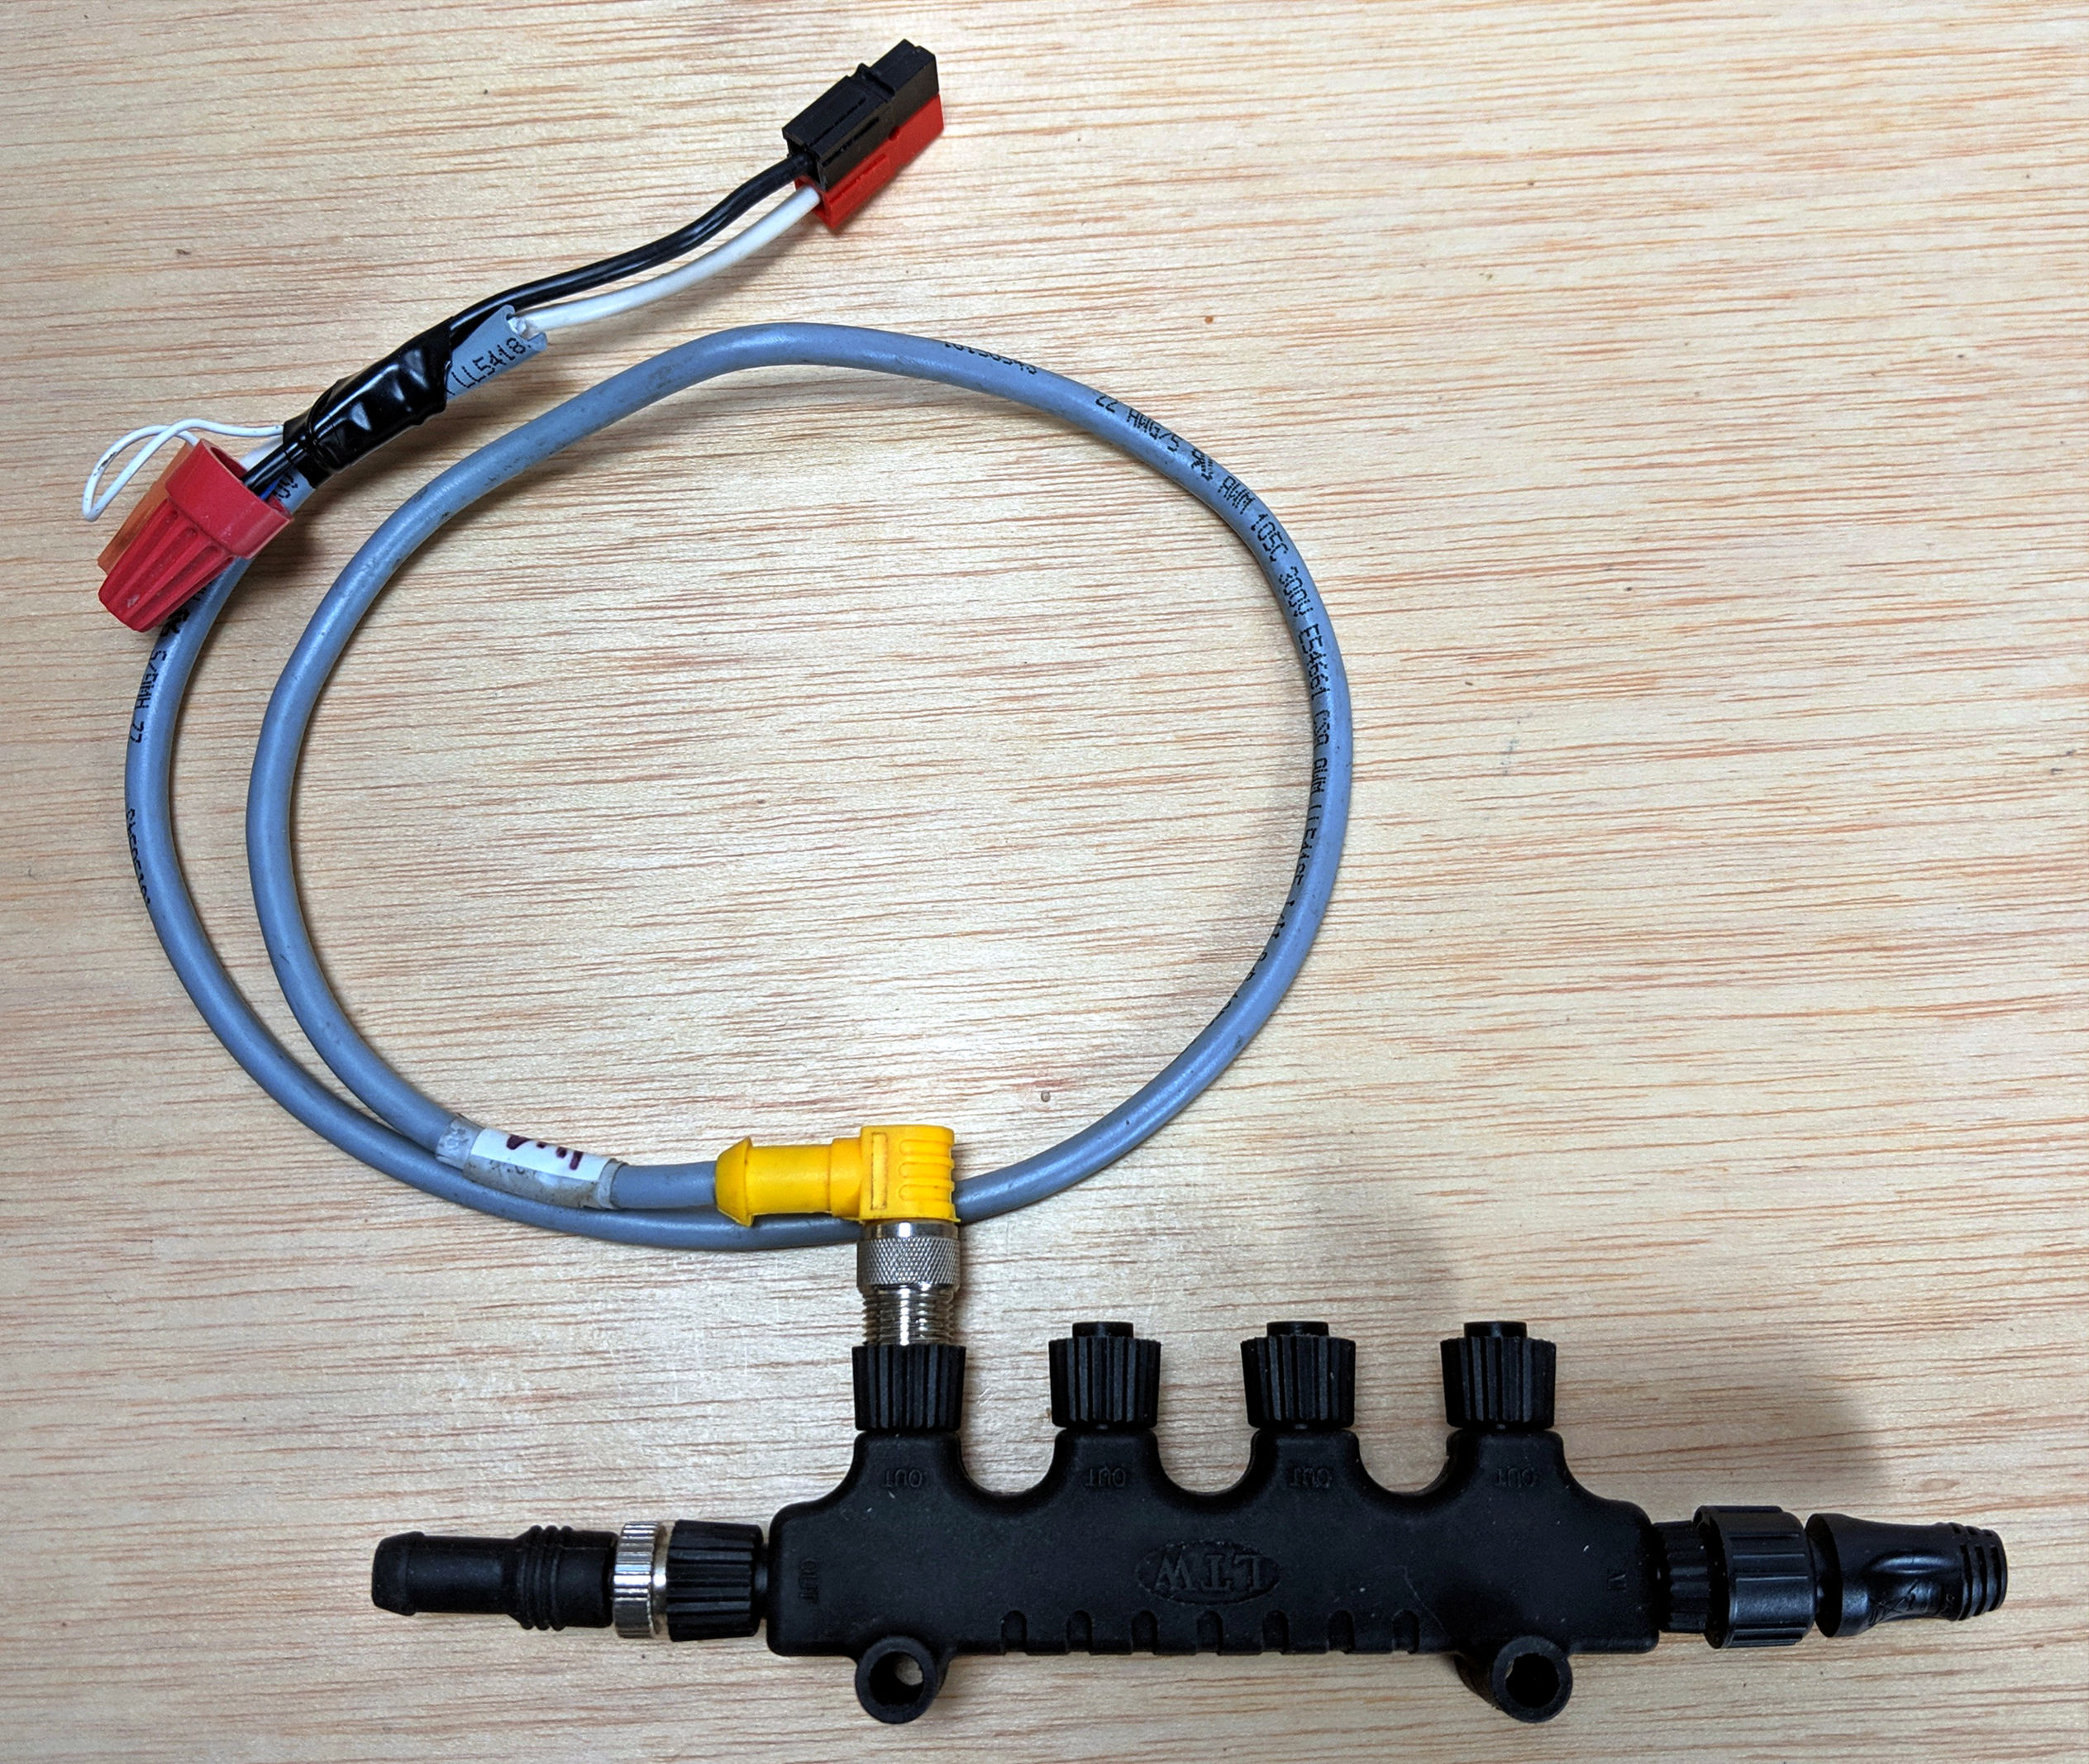 Actisense NMEA 2000 cables & connectors, plus network design tips - Panbo